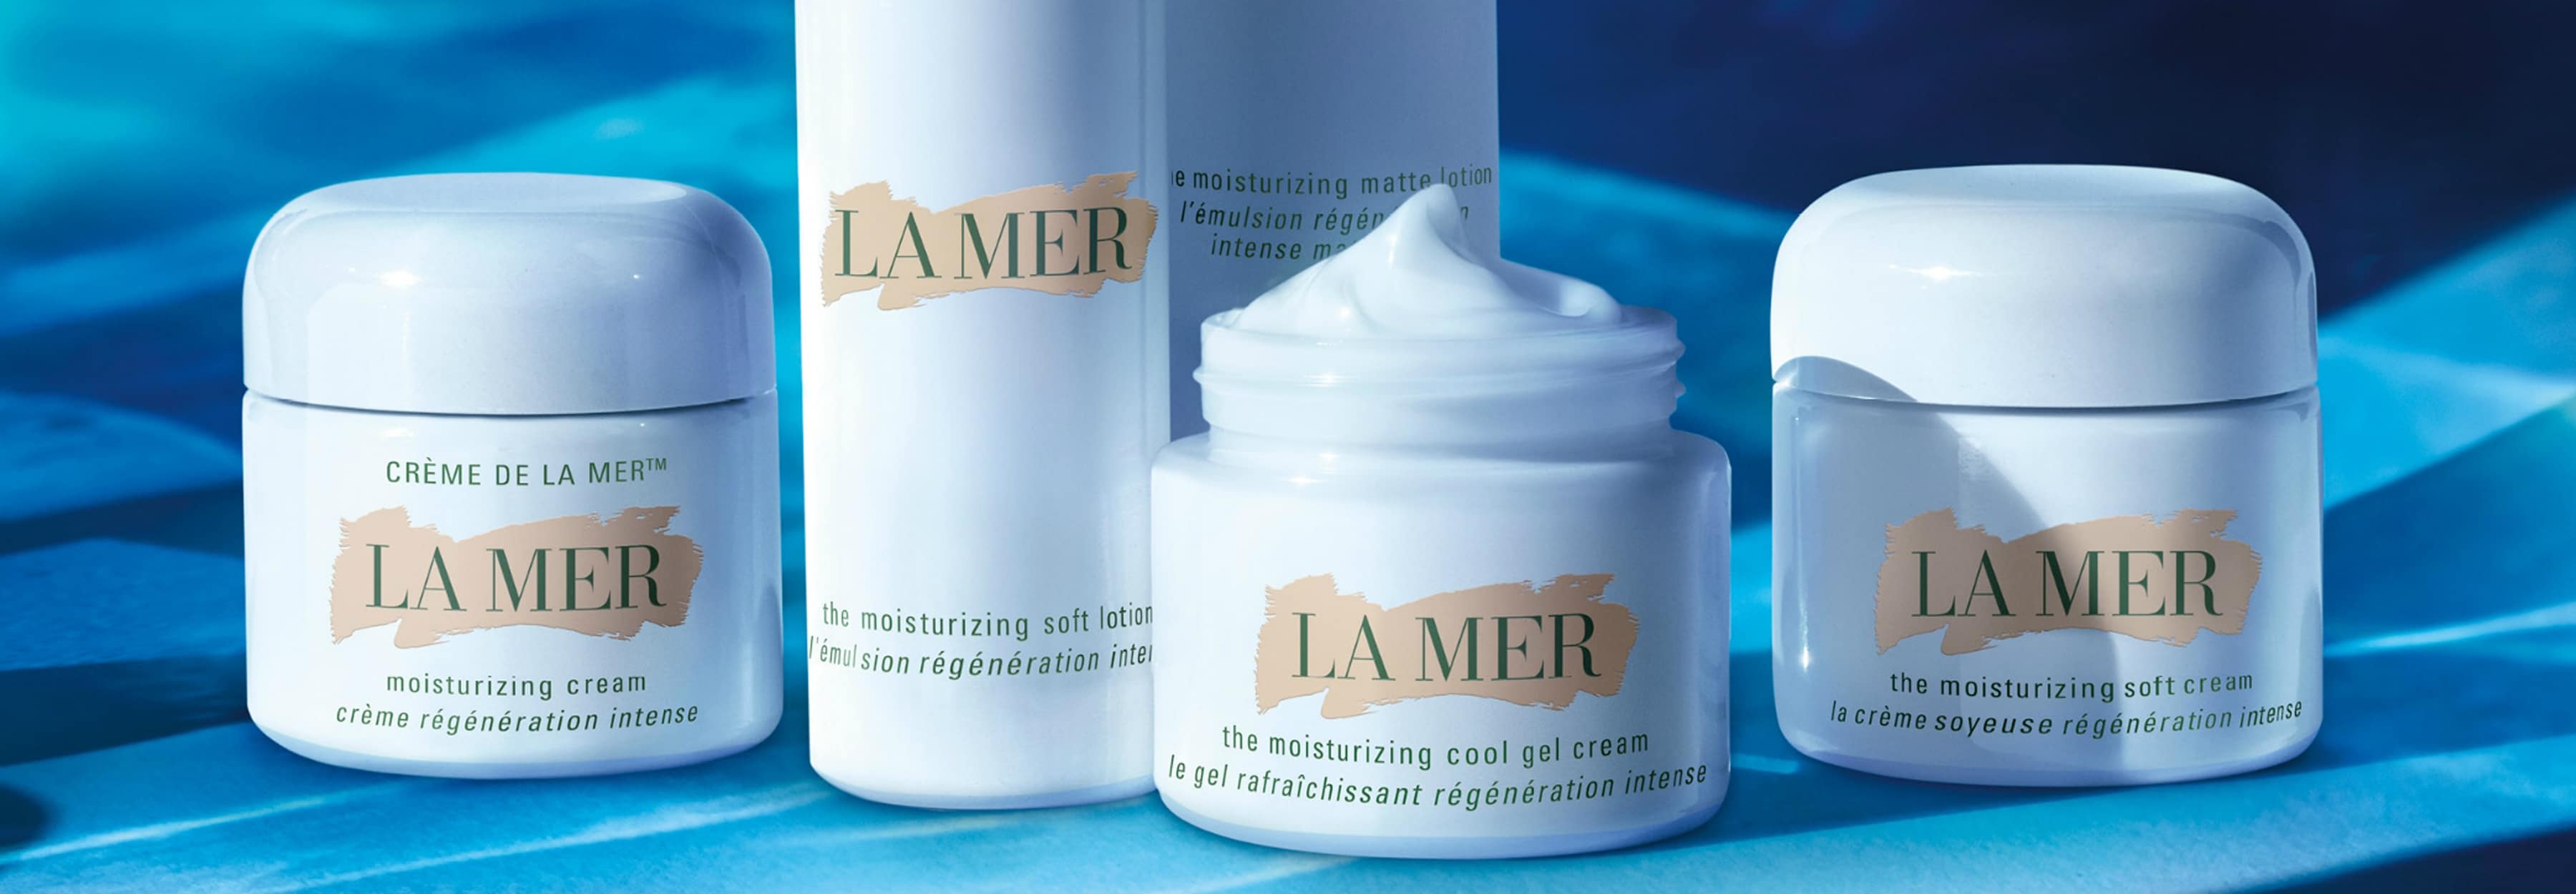 La Mer Skin Care Discount Online, Save 67% | jlcatj.gob.mx